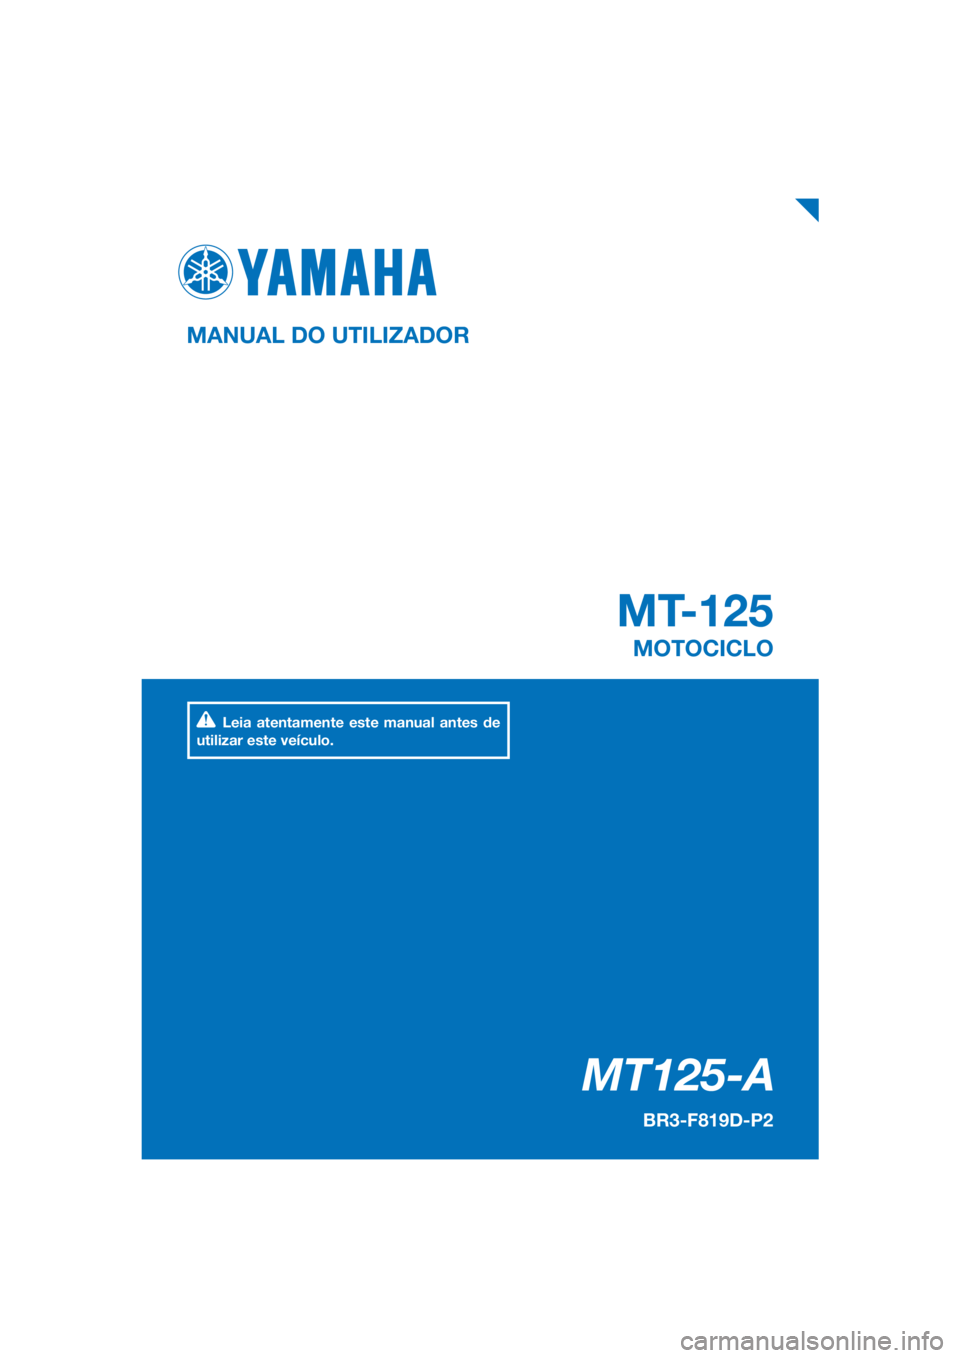 YAMAHA MT-125 2018  Manual de utilização (in Portuguese) PANTONE285C
MT125-A
MT-125
MANUAL DO UTILIZADOR
BR3-F819D-P2
MOTOCICLO
Leia atentamente este manual antes de 
utilizar este veículo.
[Portuguese  (P)] 